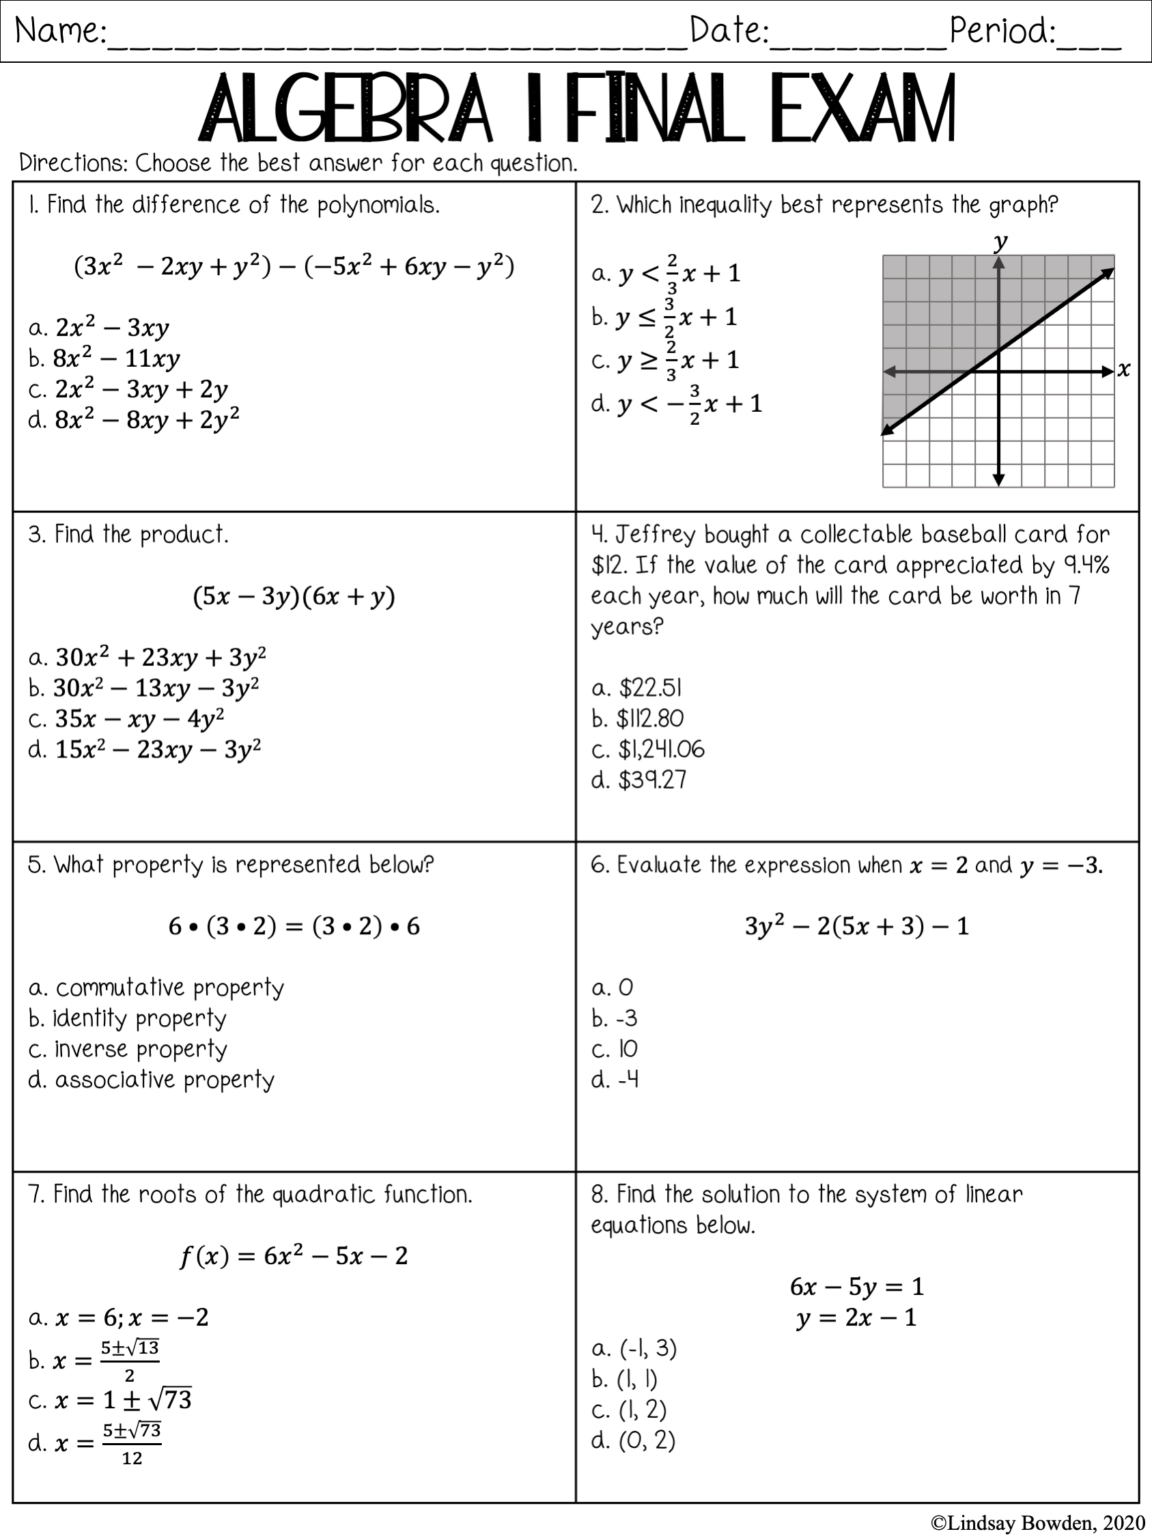 algebra-1-final-exam-with-study-guide-editable-lindsay-bowden